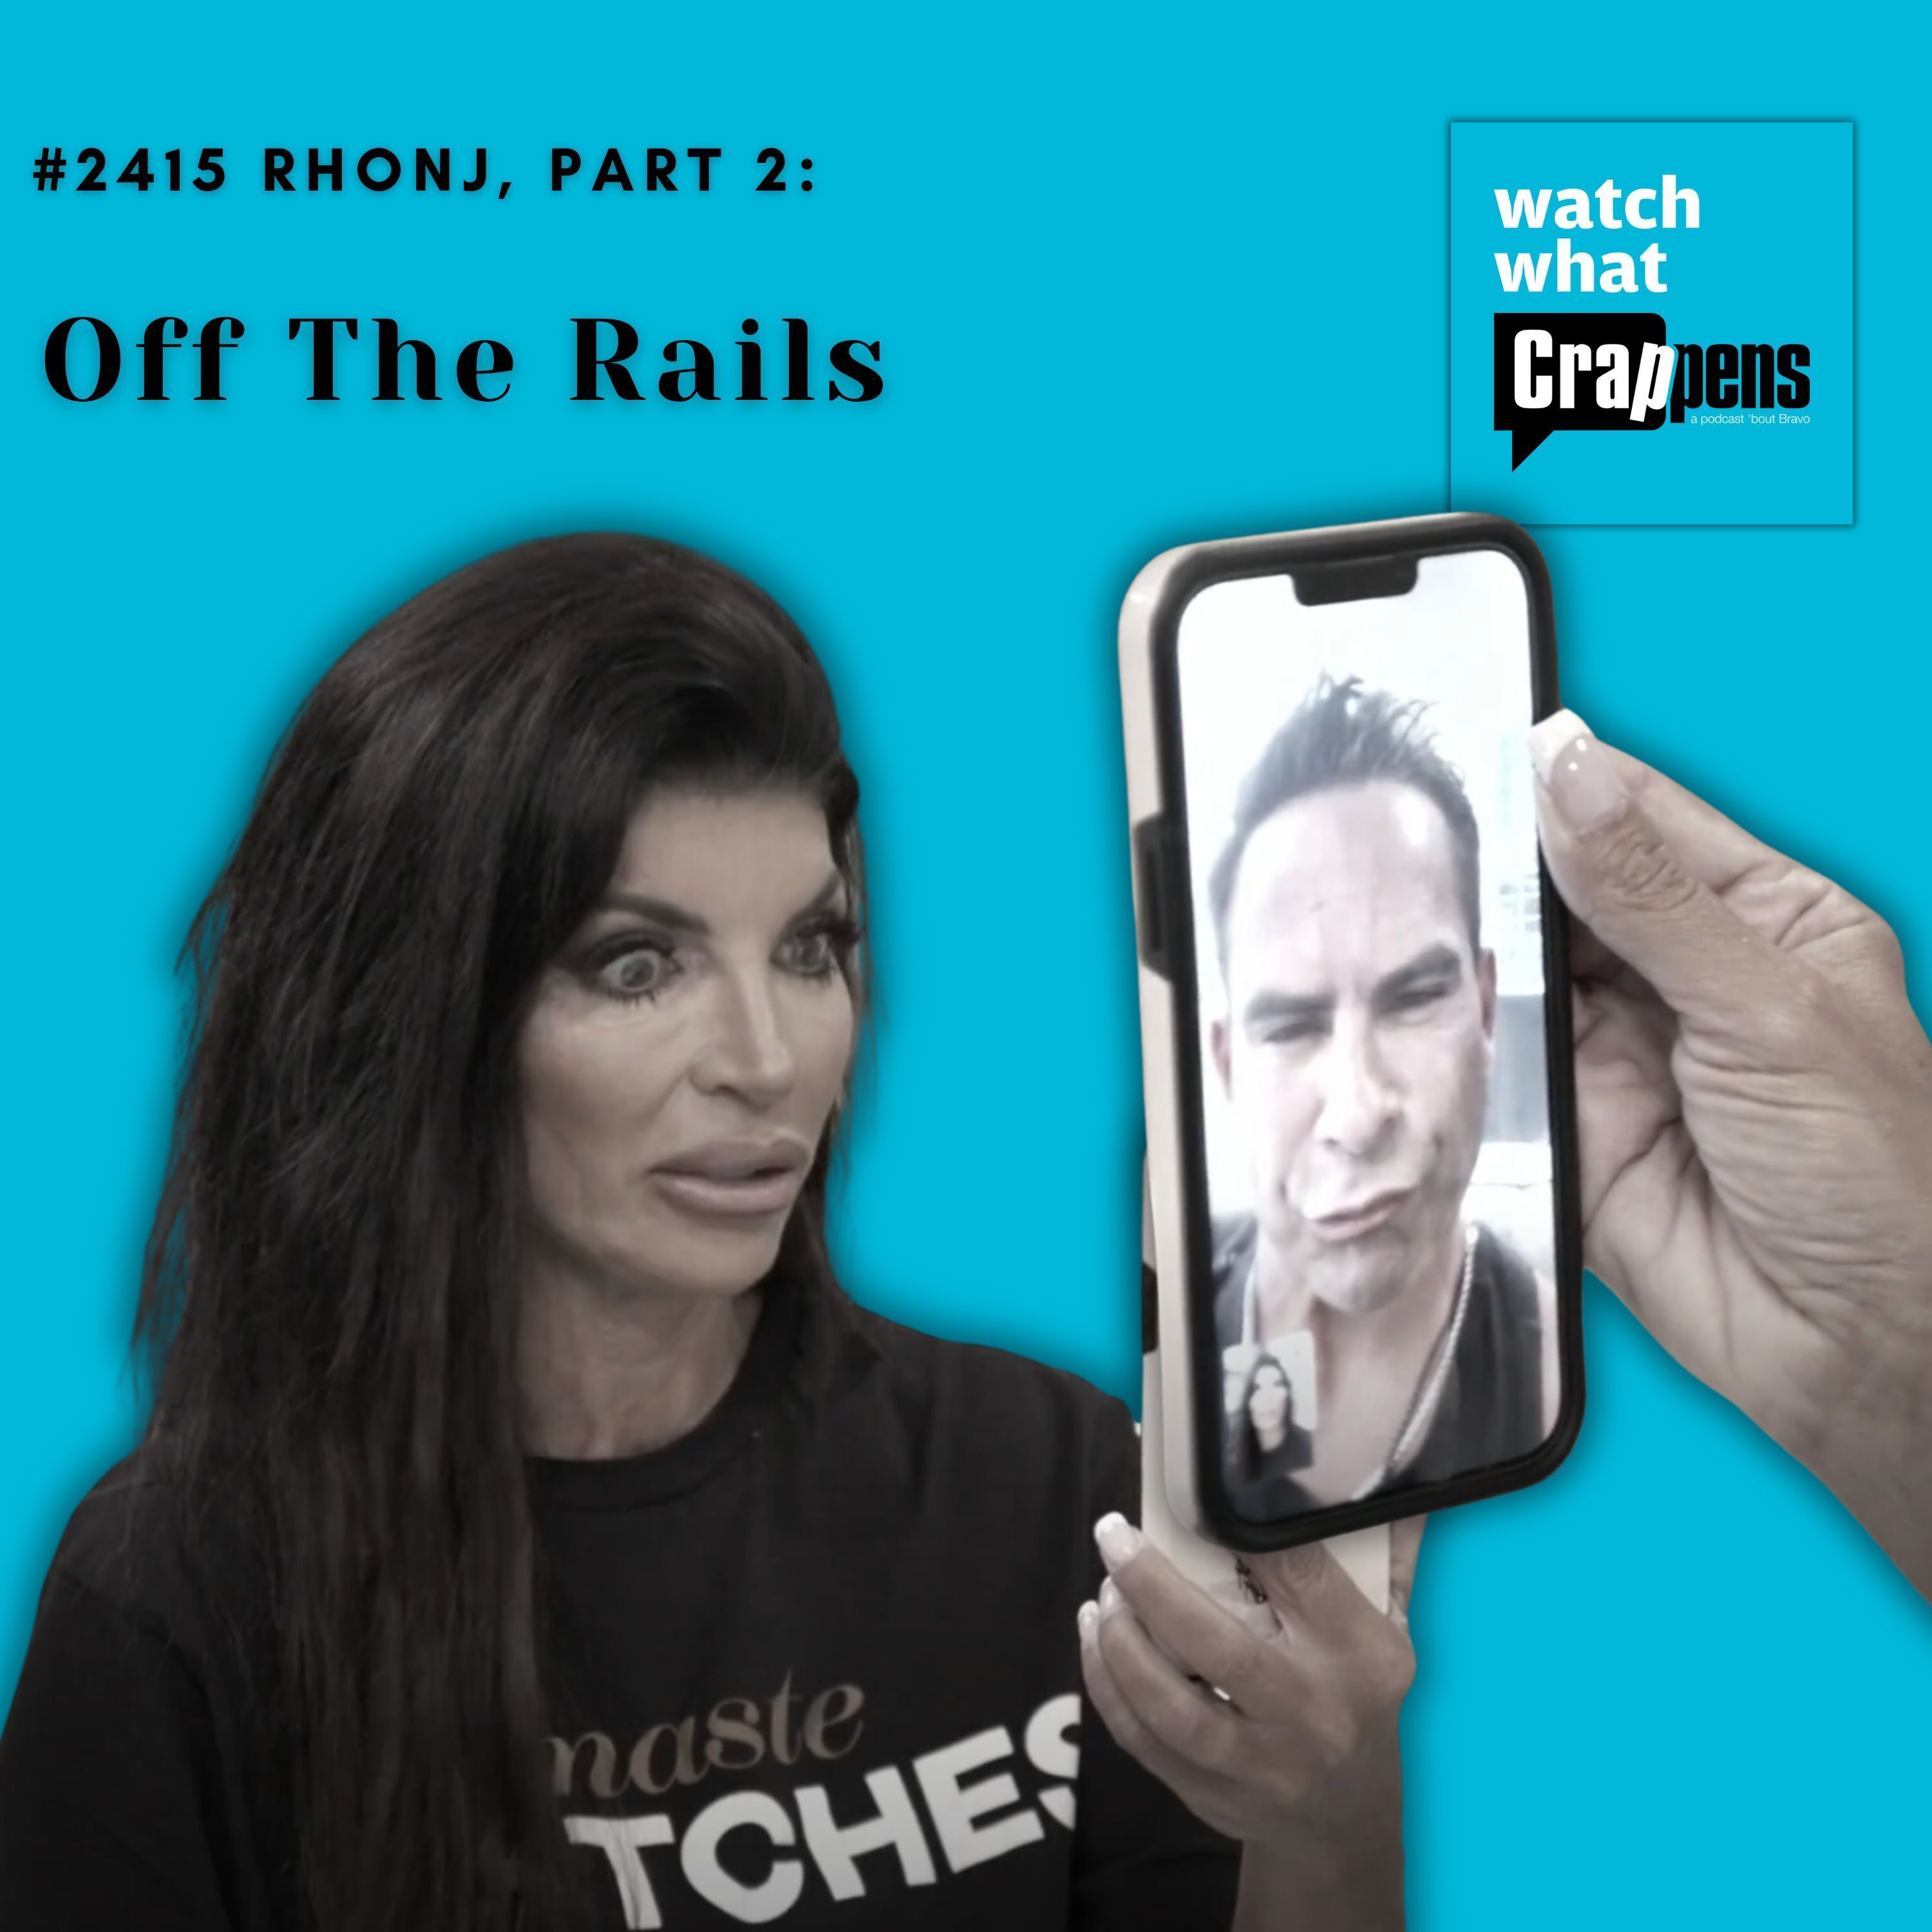 #2415 RHONJ, Part 2:  Off the Rails